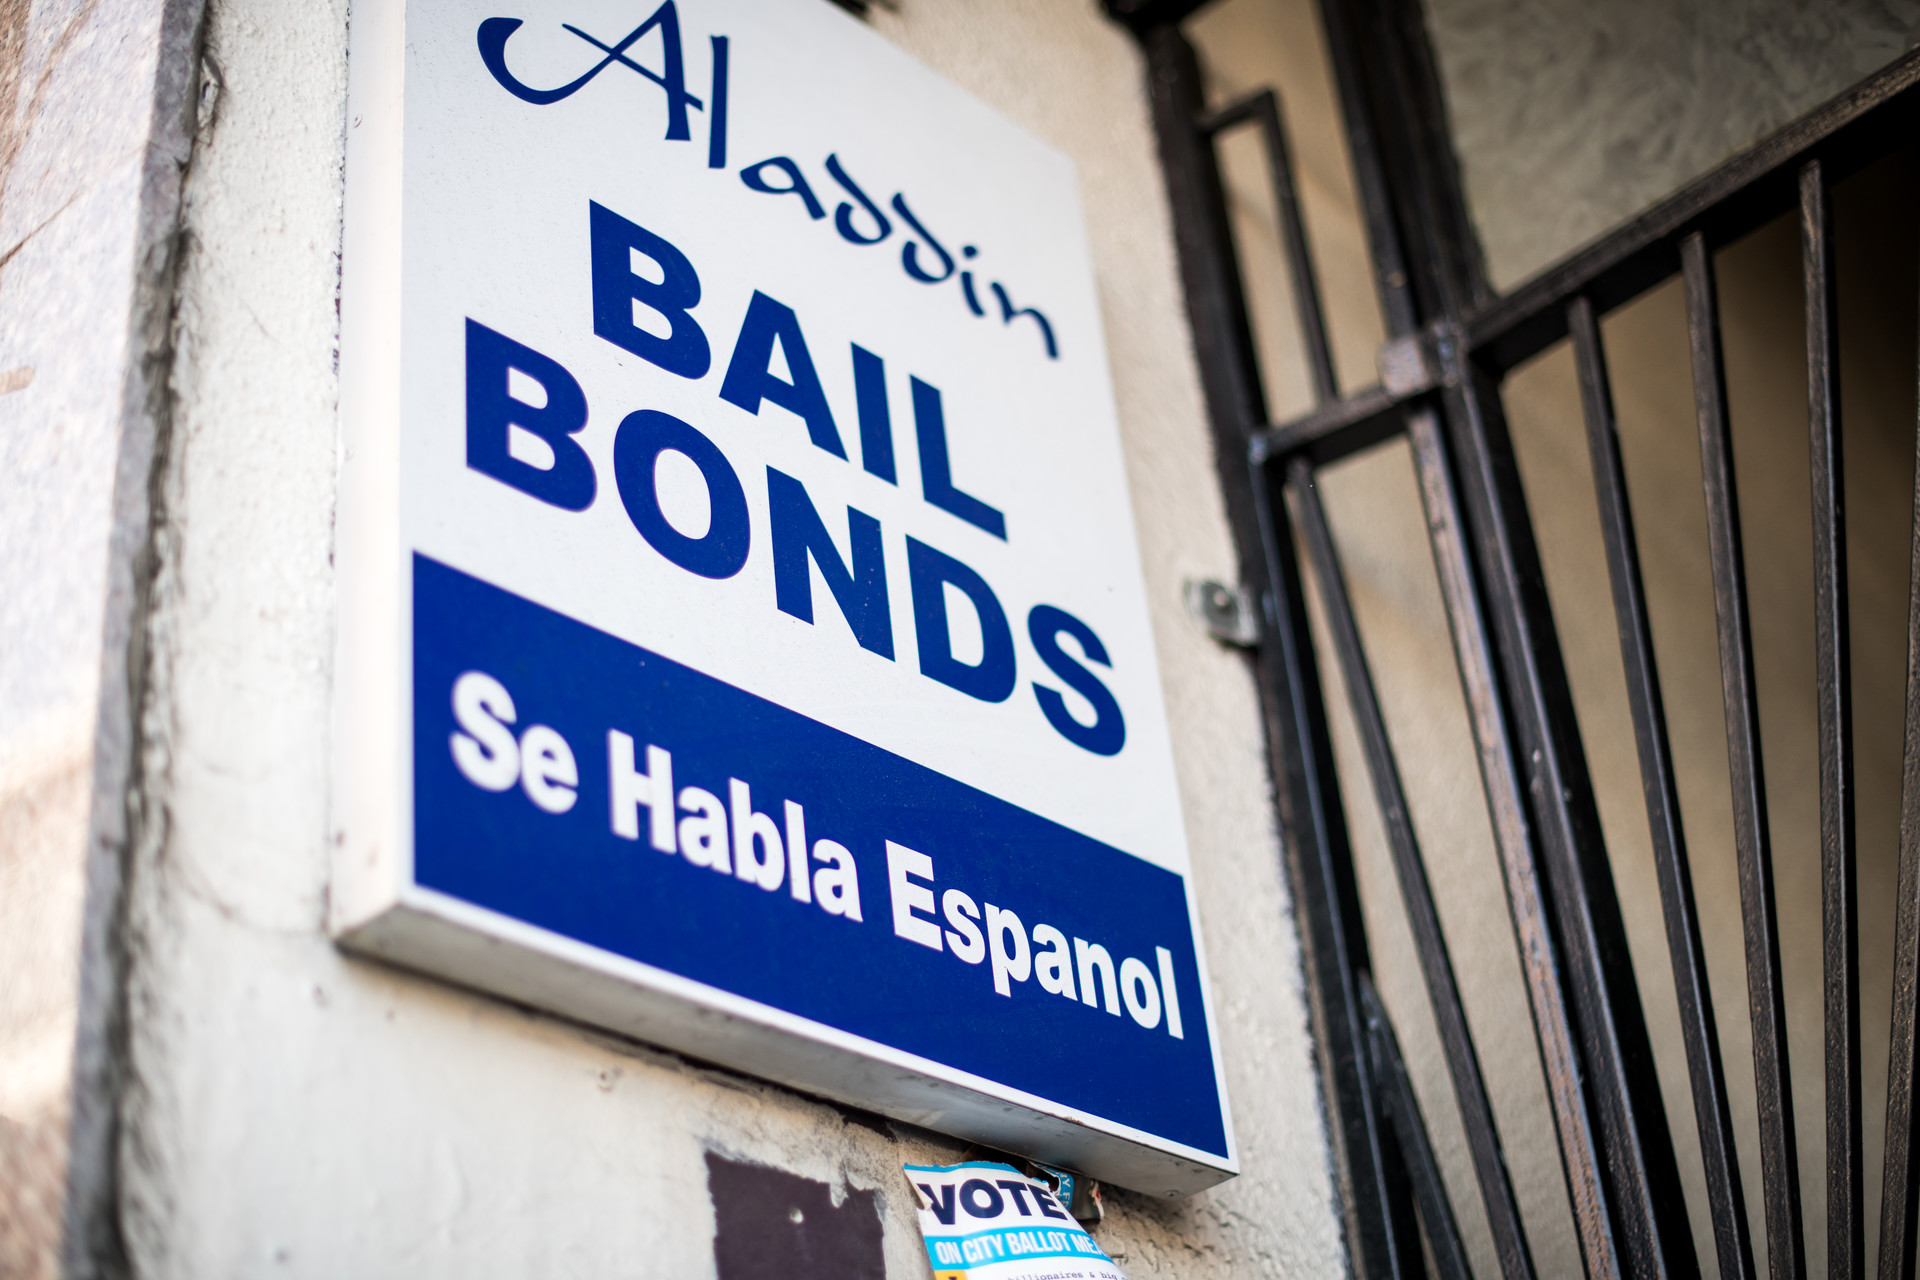 Aaa Bail Bonds